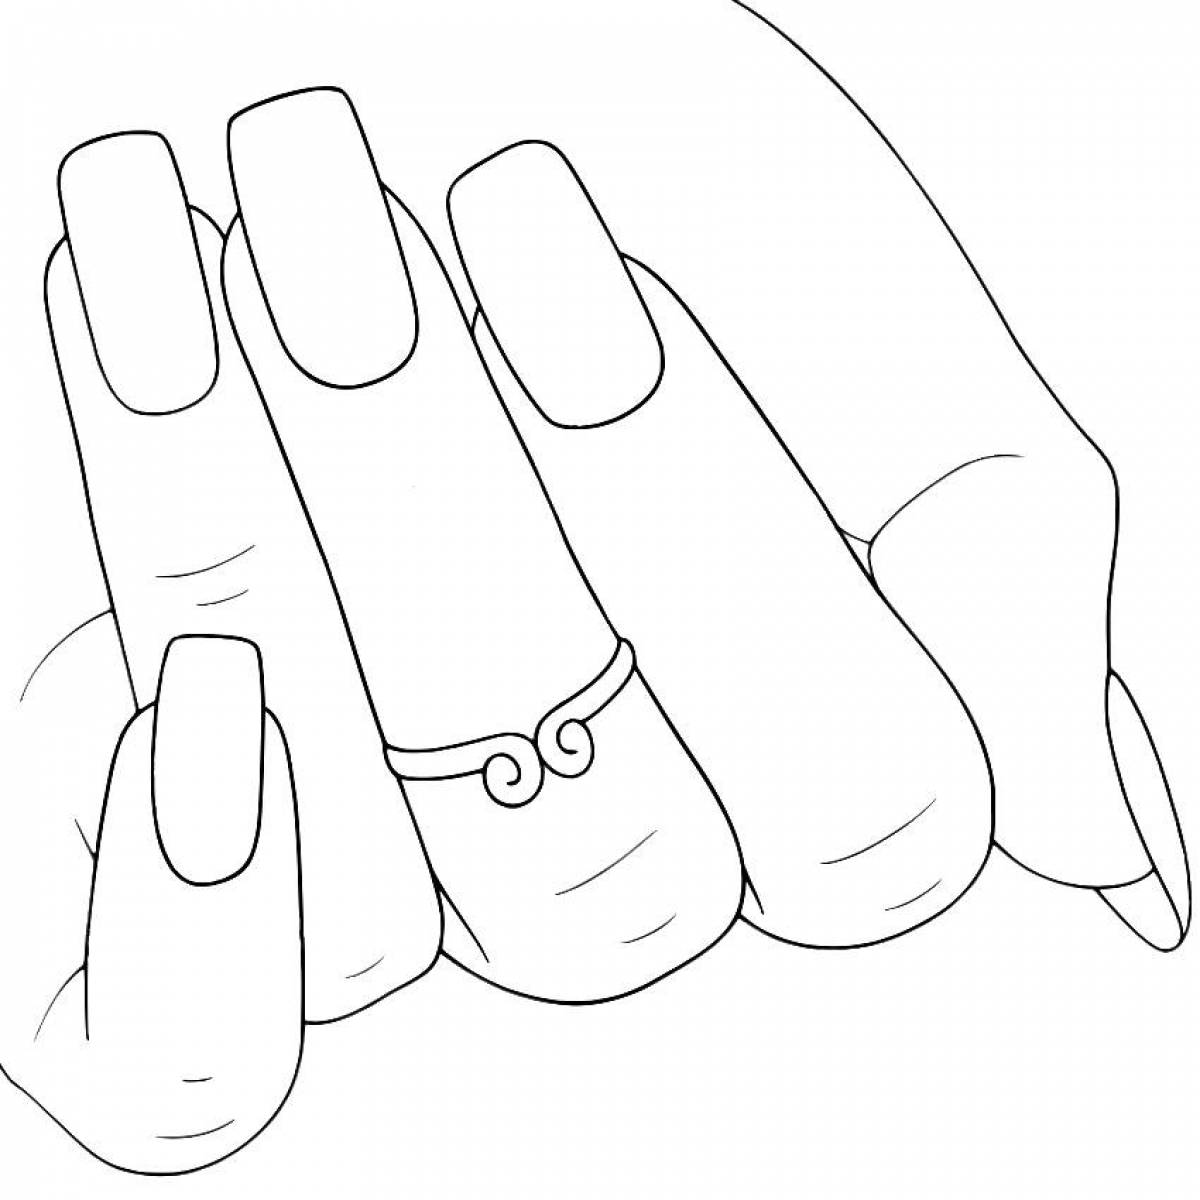 Coloring royal hand with nails